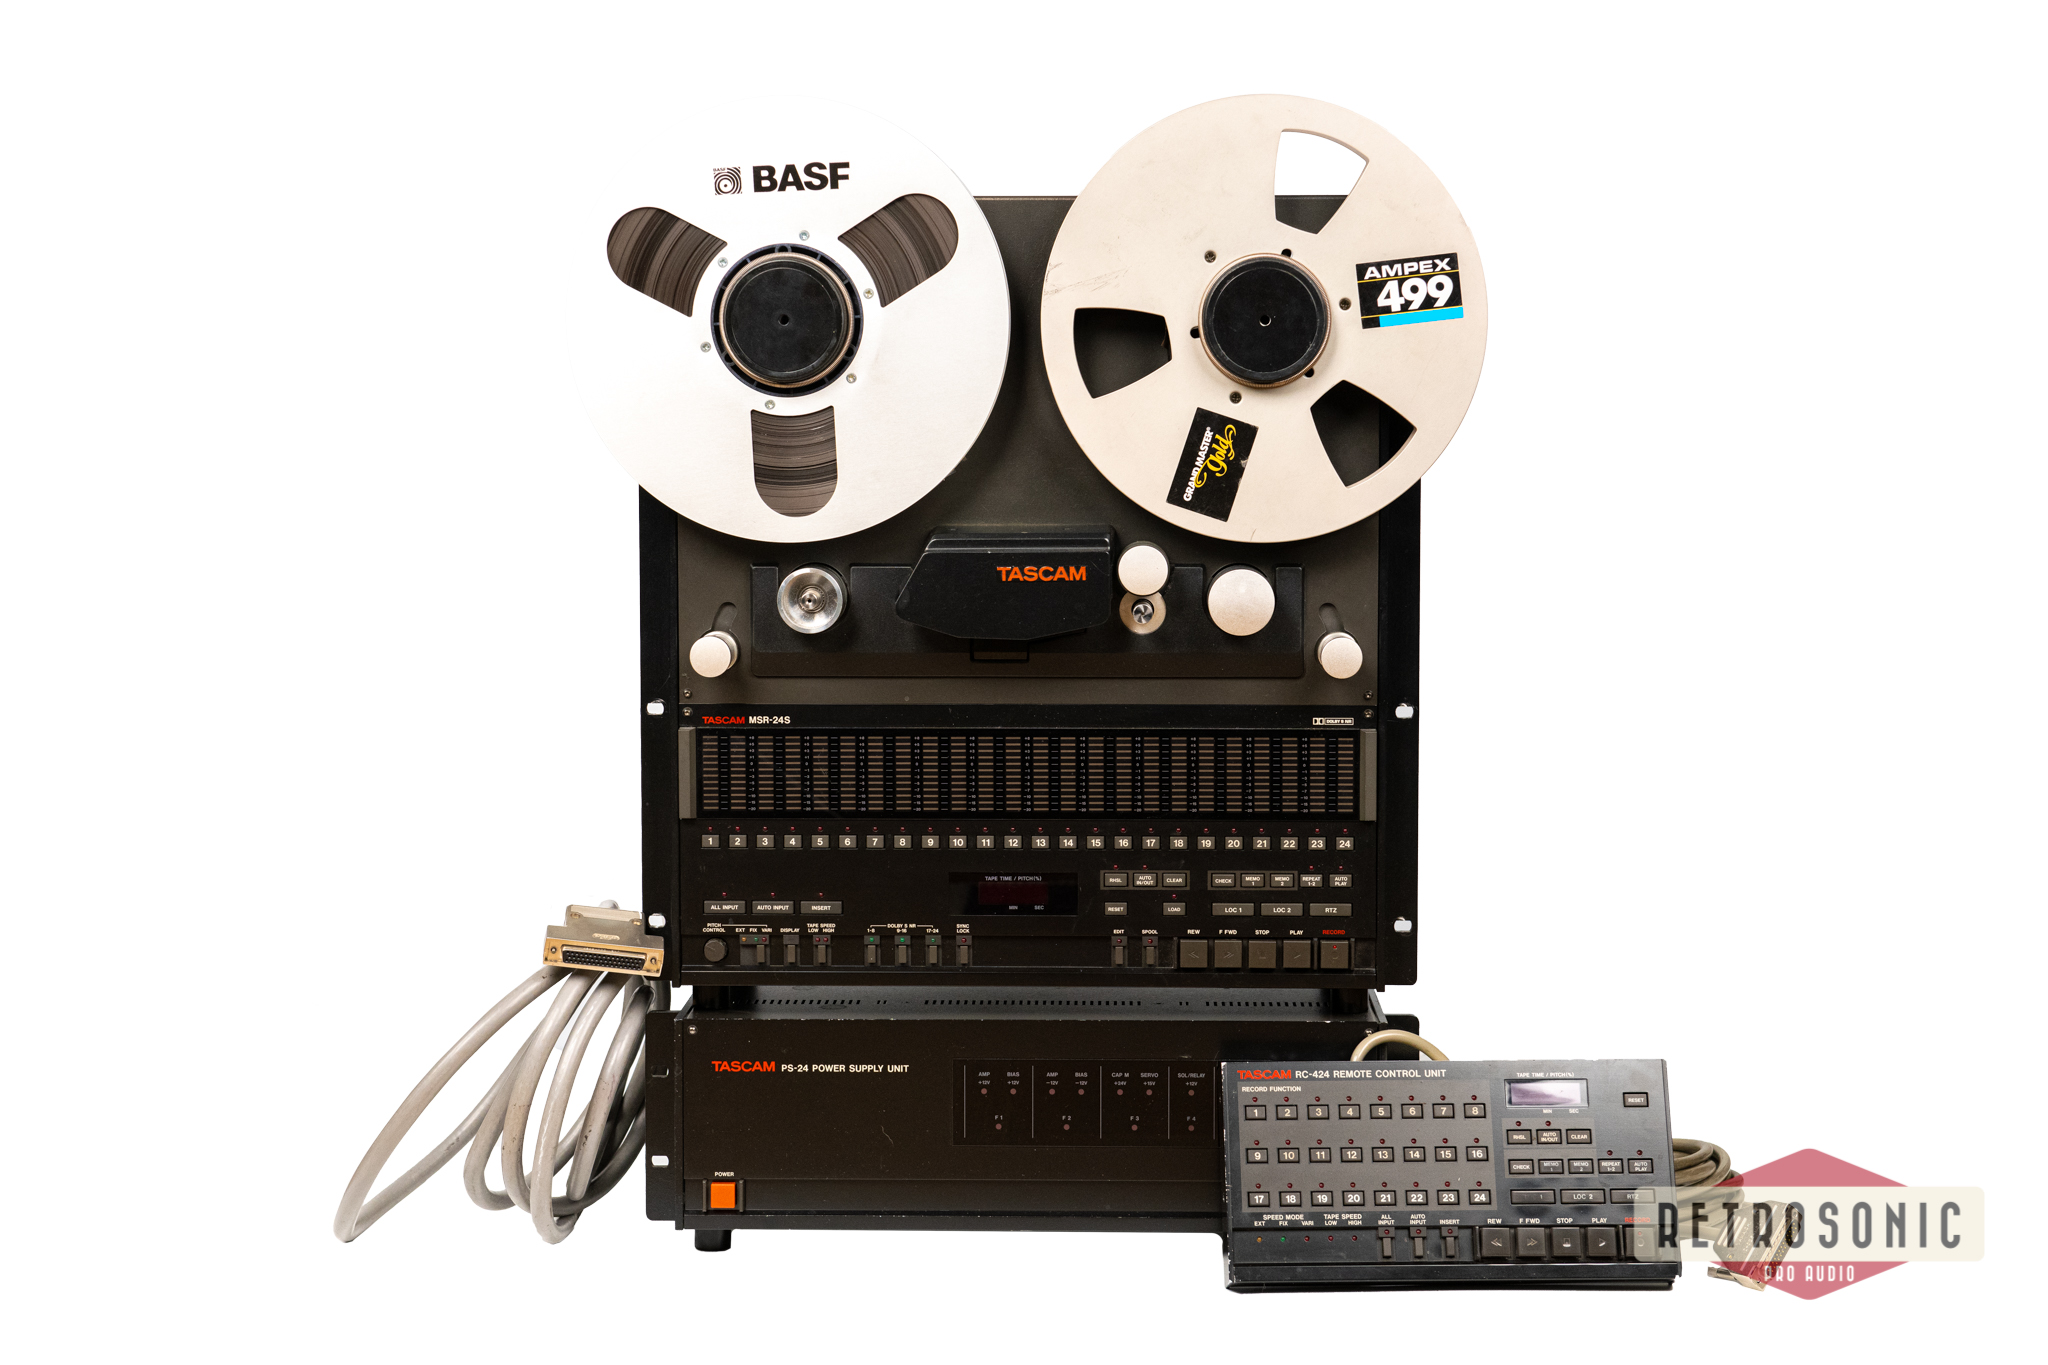 https://www.retrosonic.shop/retrosonic-future/images/products/tascam-msr24s-1-inch-24-track-tape-recorder-remote-rc424-1.jpg